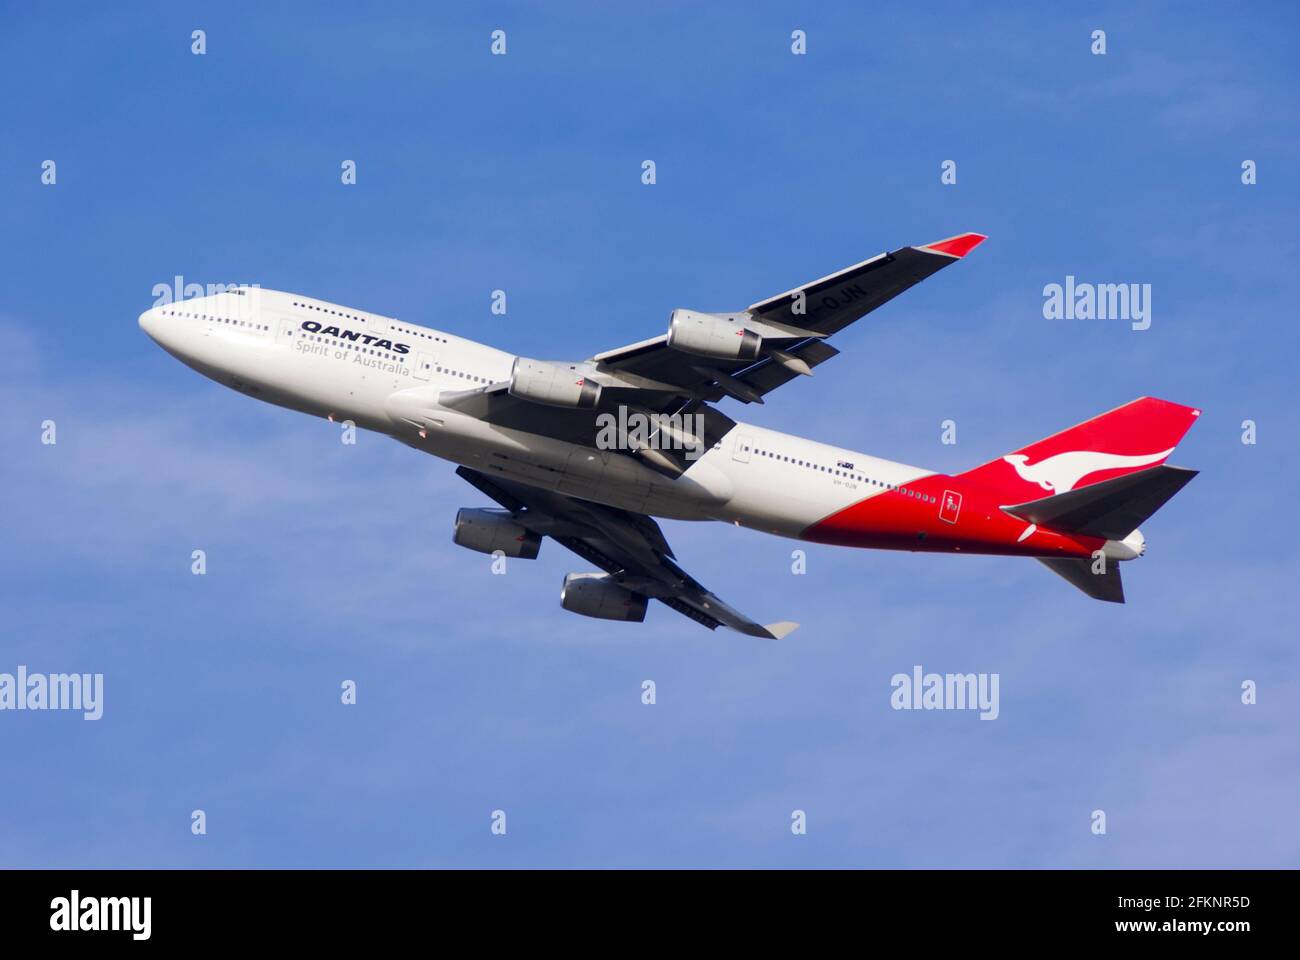 Qantas Boeing 747 Jumbo jet airliner plane VH-OJN taking off from London Heathrow Airport, UK. Longreach flight to Australia. Long distance travel Stock Photo